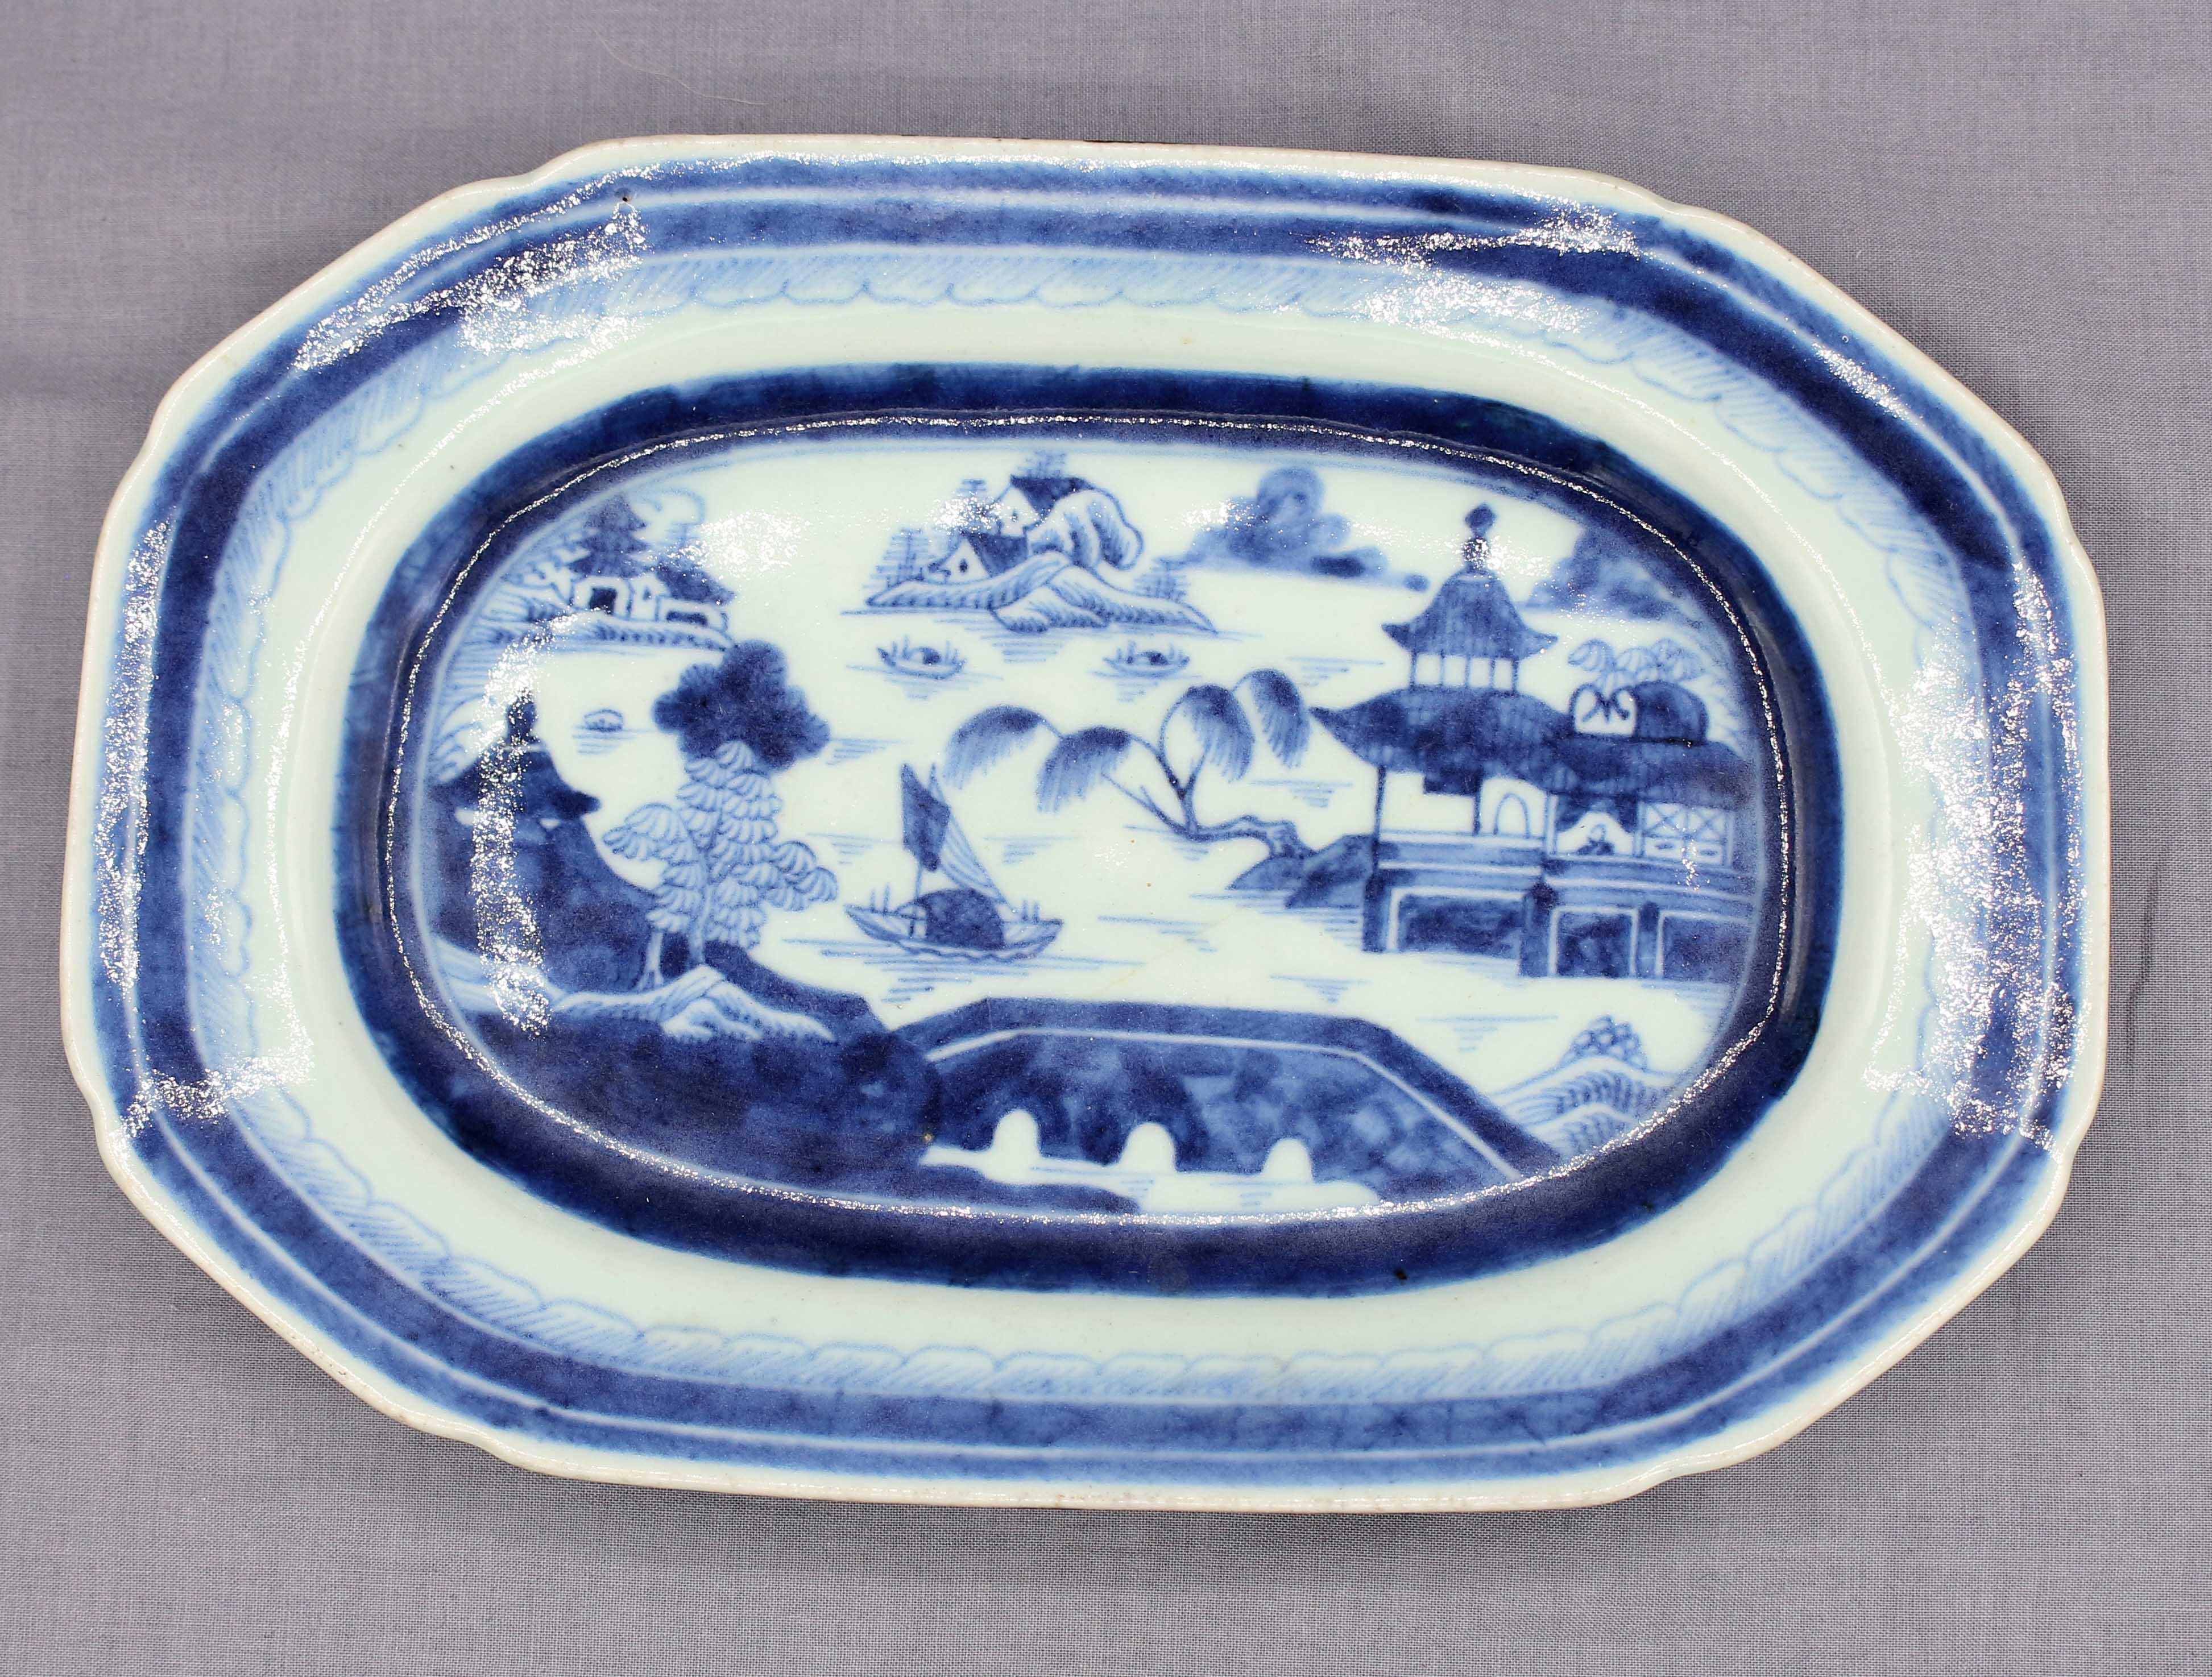 Circa 1830 Blue Canton small platter, Chinese export. Orange peel bottom. Porcelain. Modified octagonal form.
9 7/8